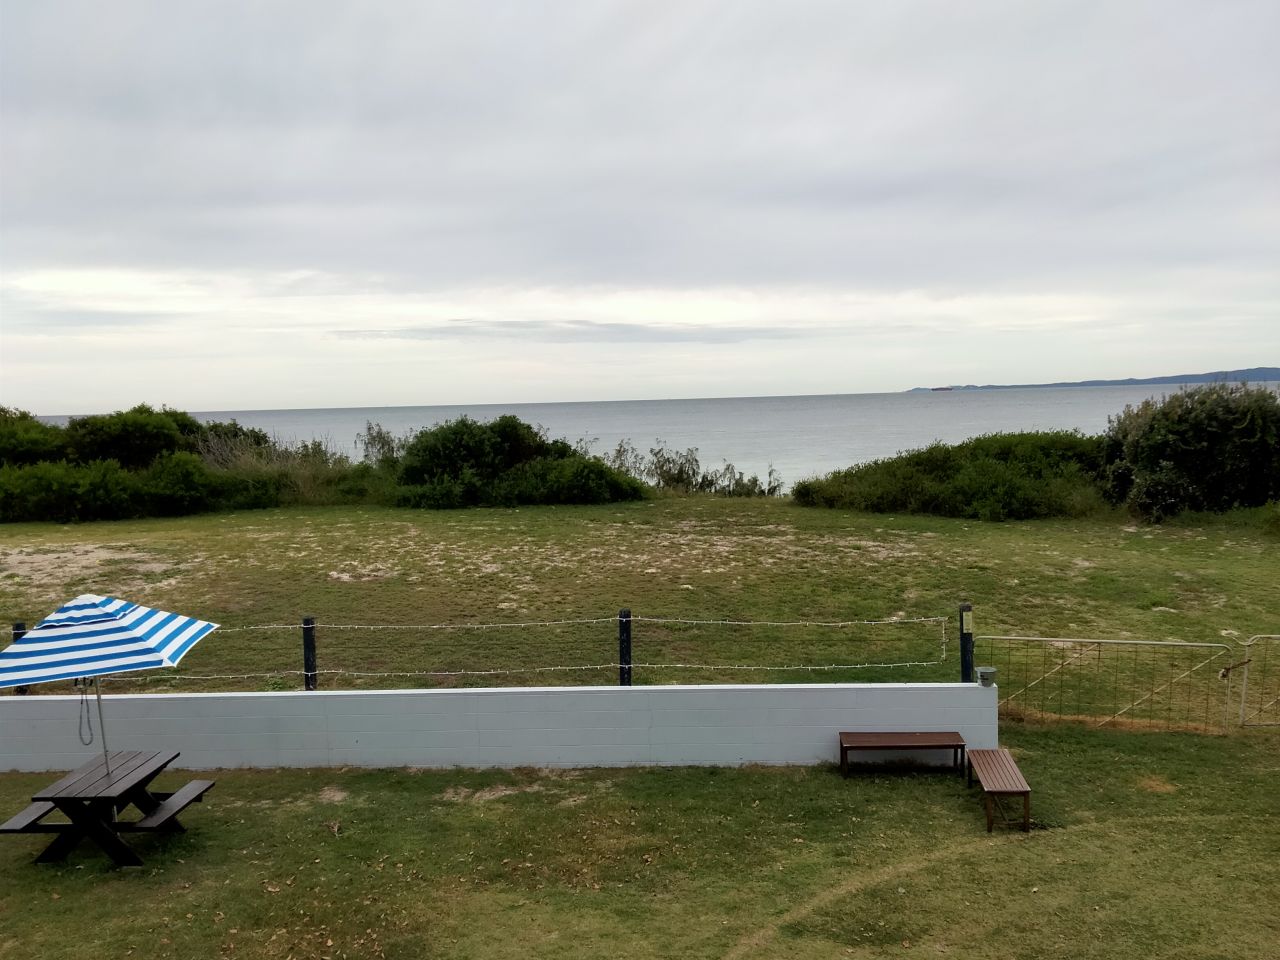 Lunch at Bribie Island Surf Club overlooking Moreton Bay